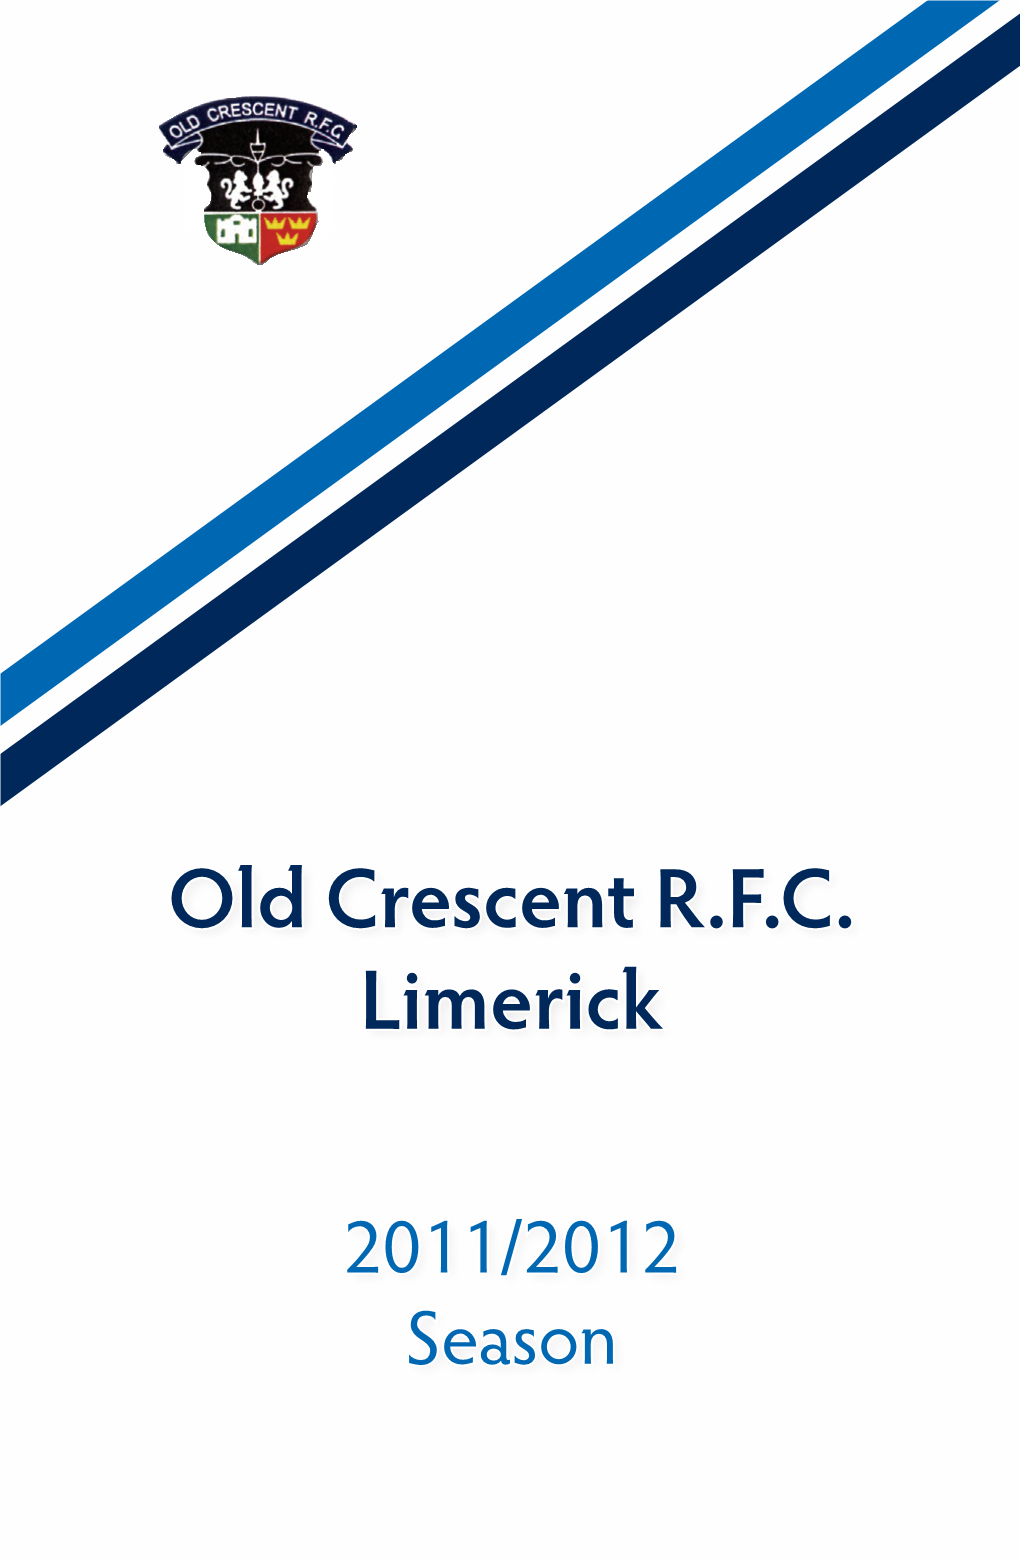 Old Crescent R.F.C. Limerick